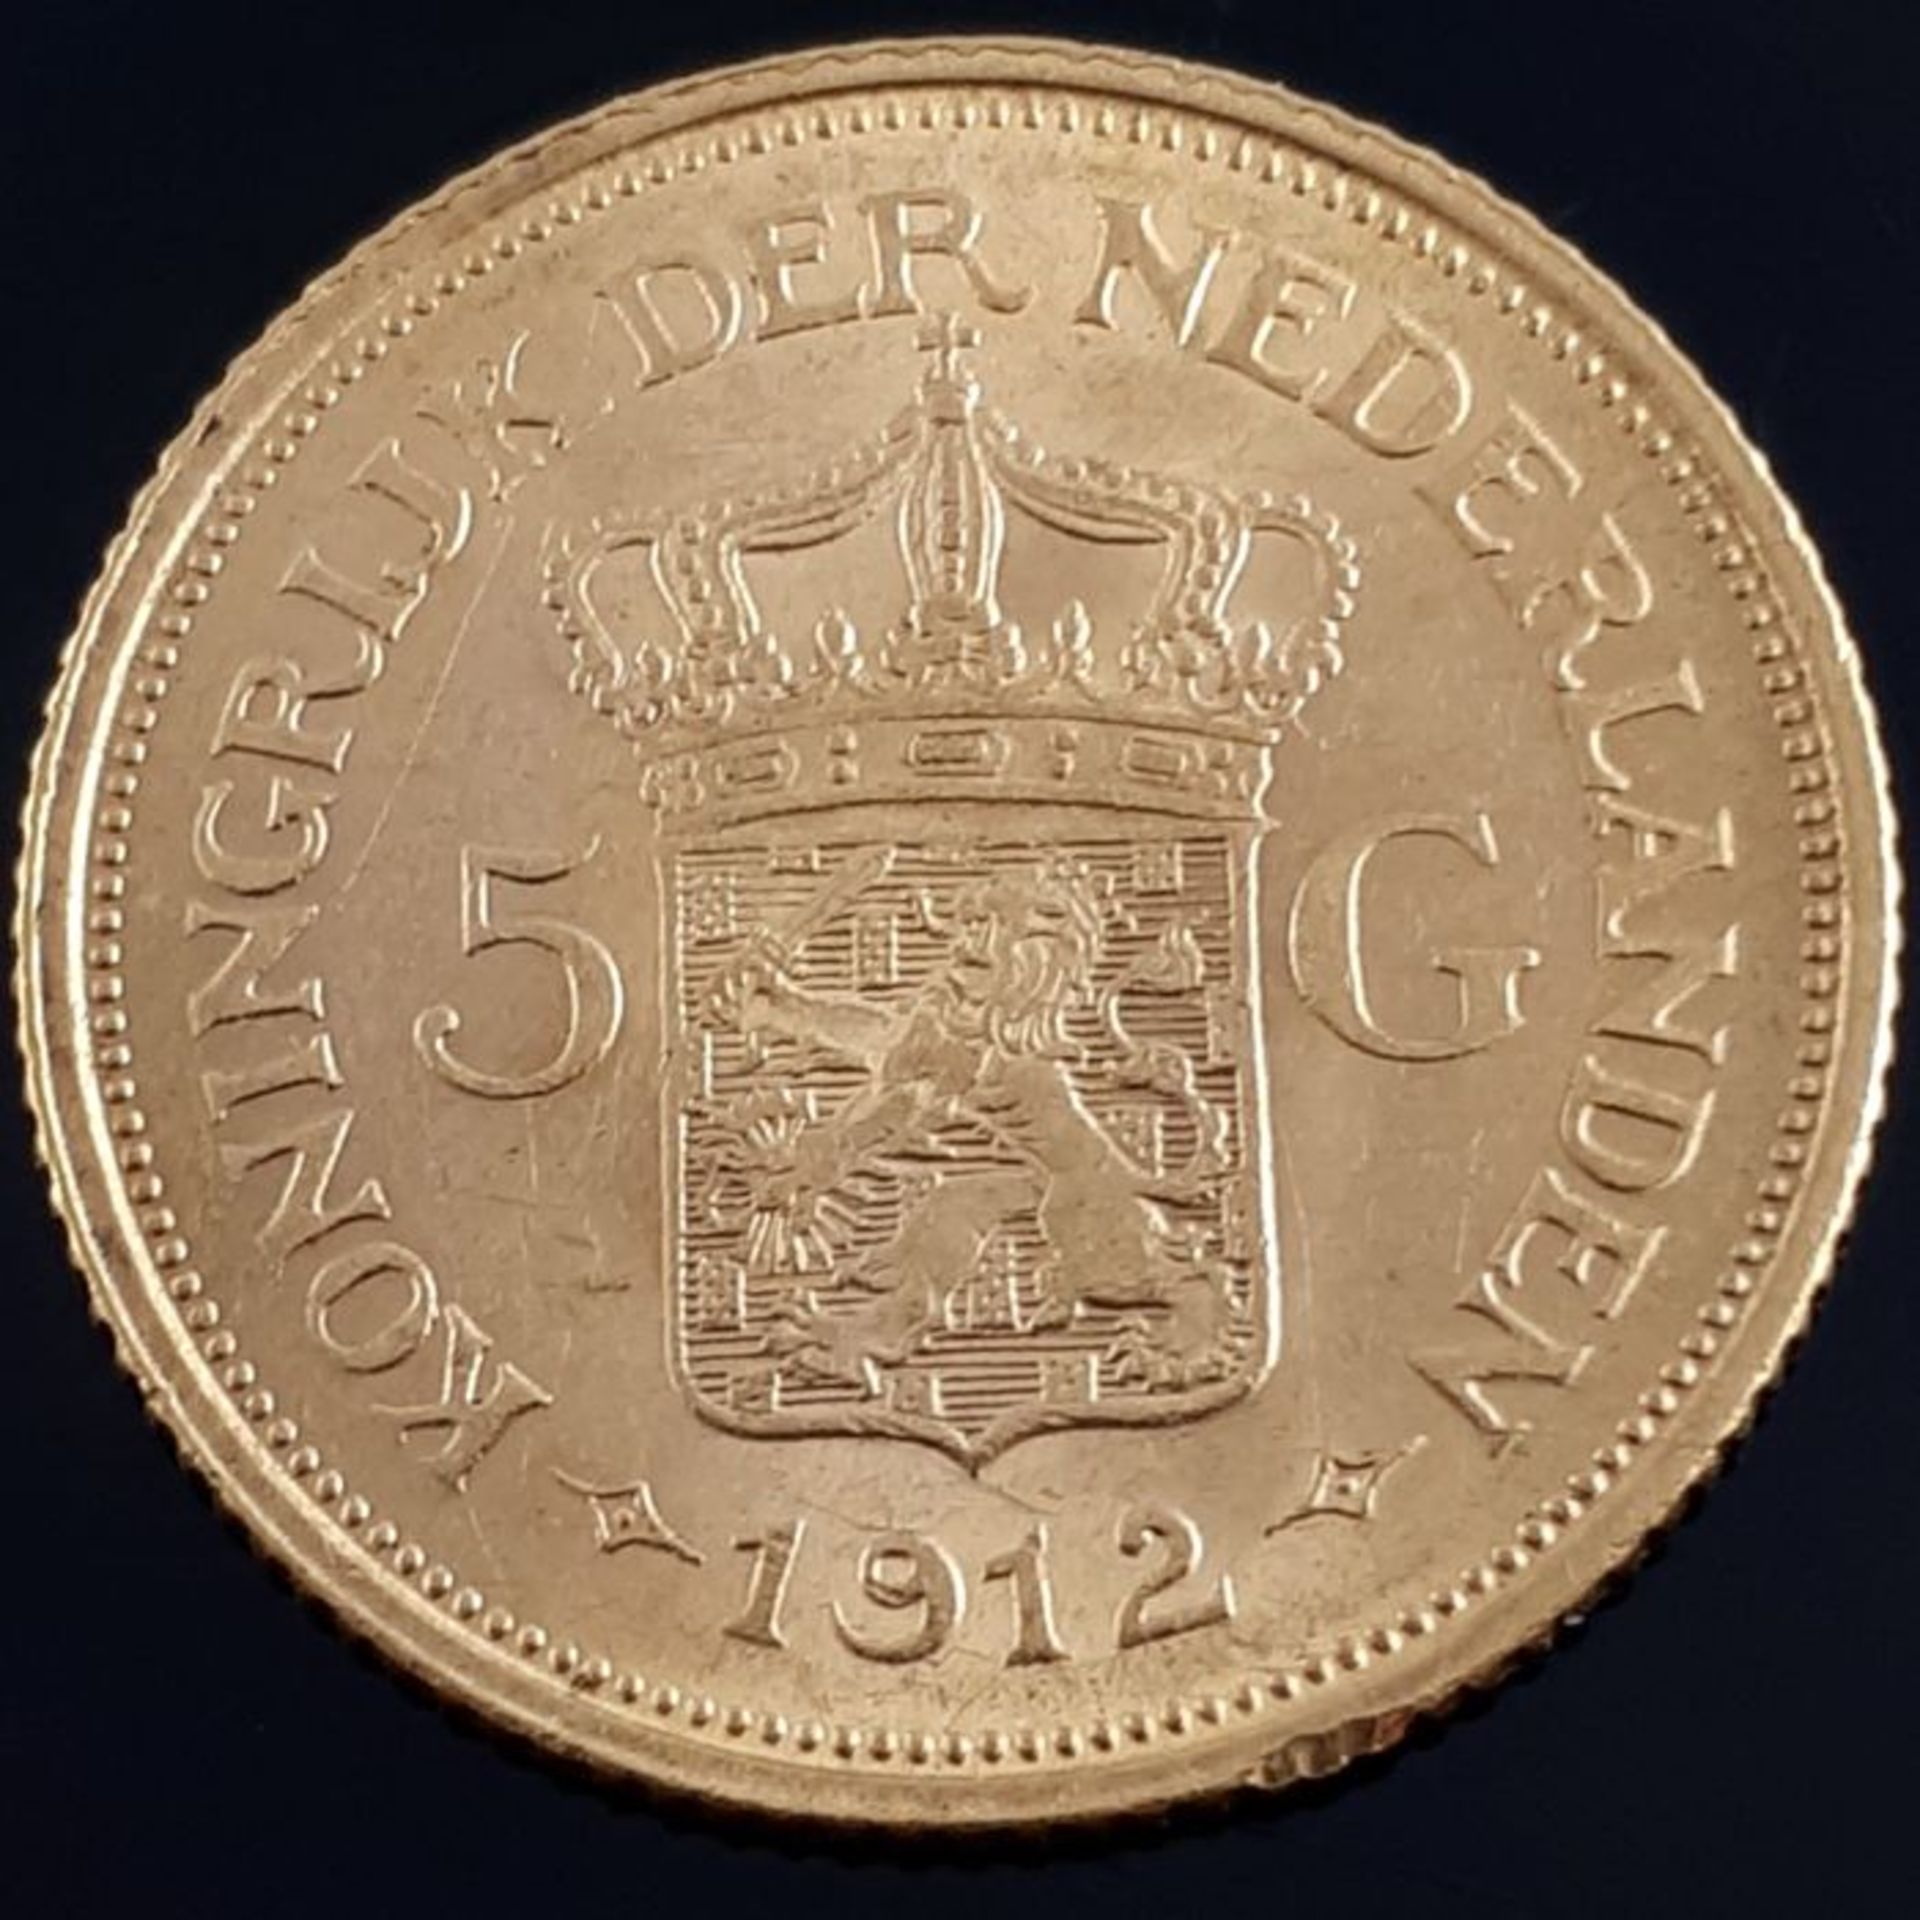 The Netherlands - 5 Gulden 1912- Wilhelmina - Gold - Image 2 of 2